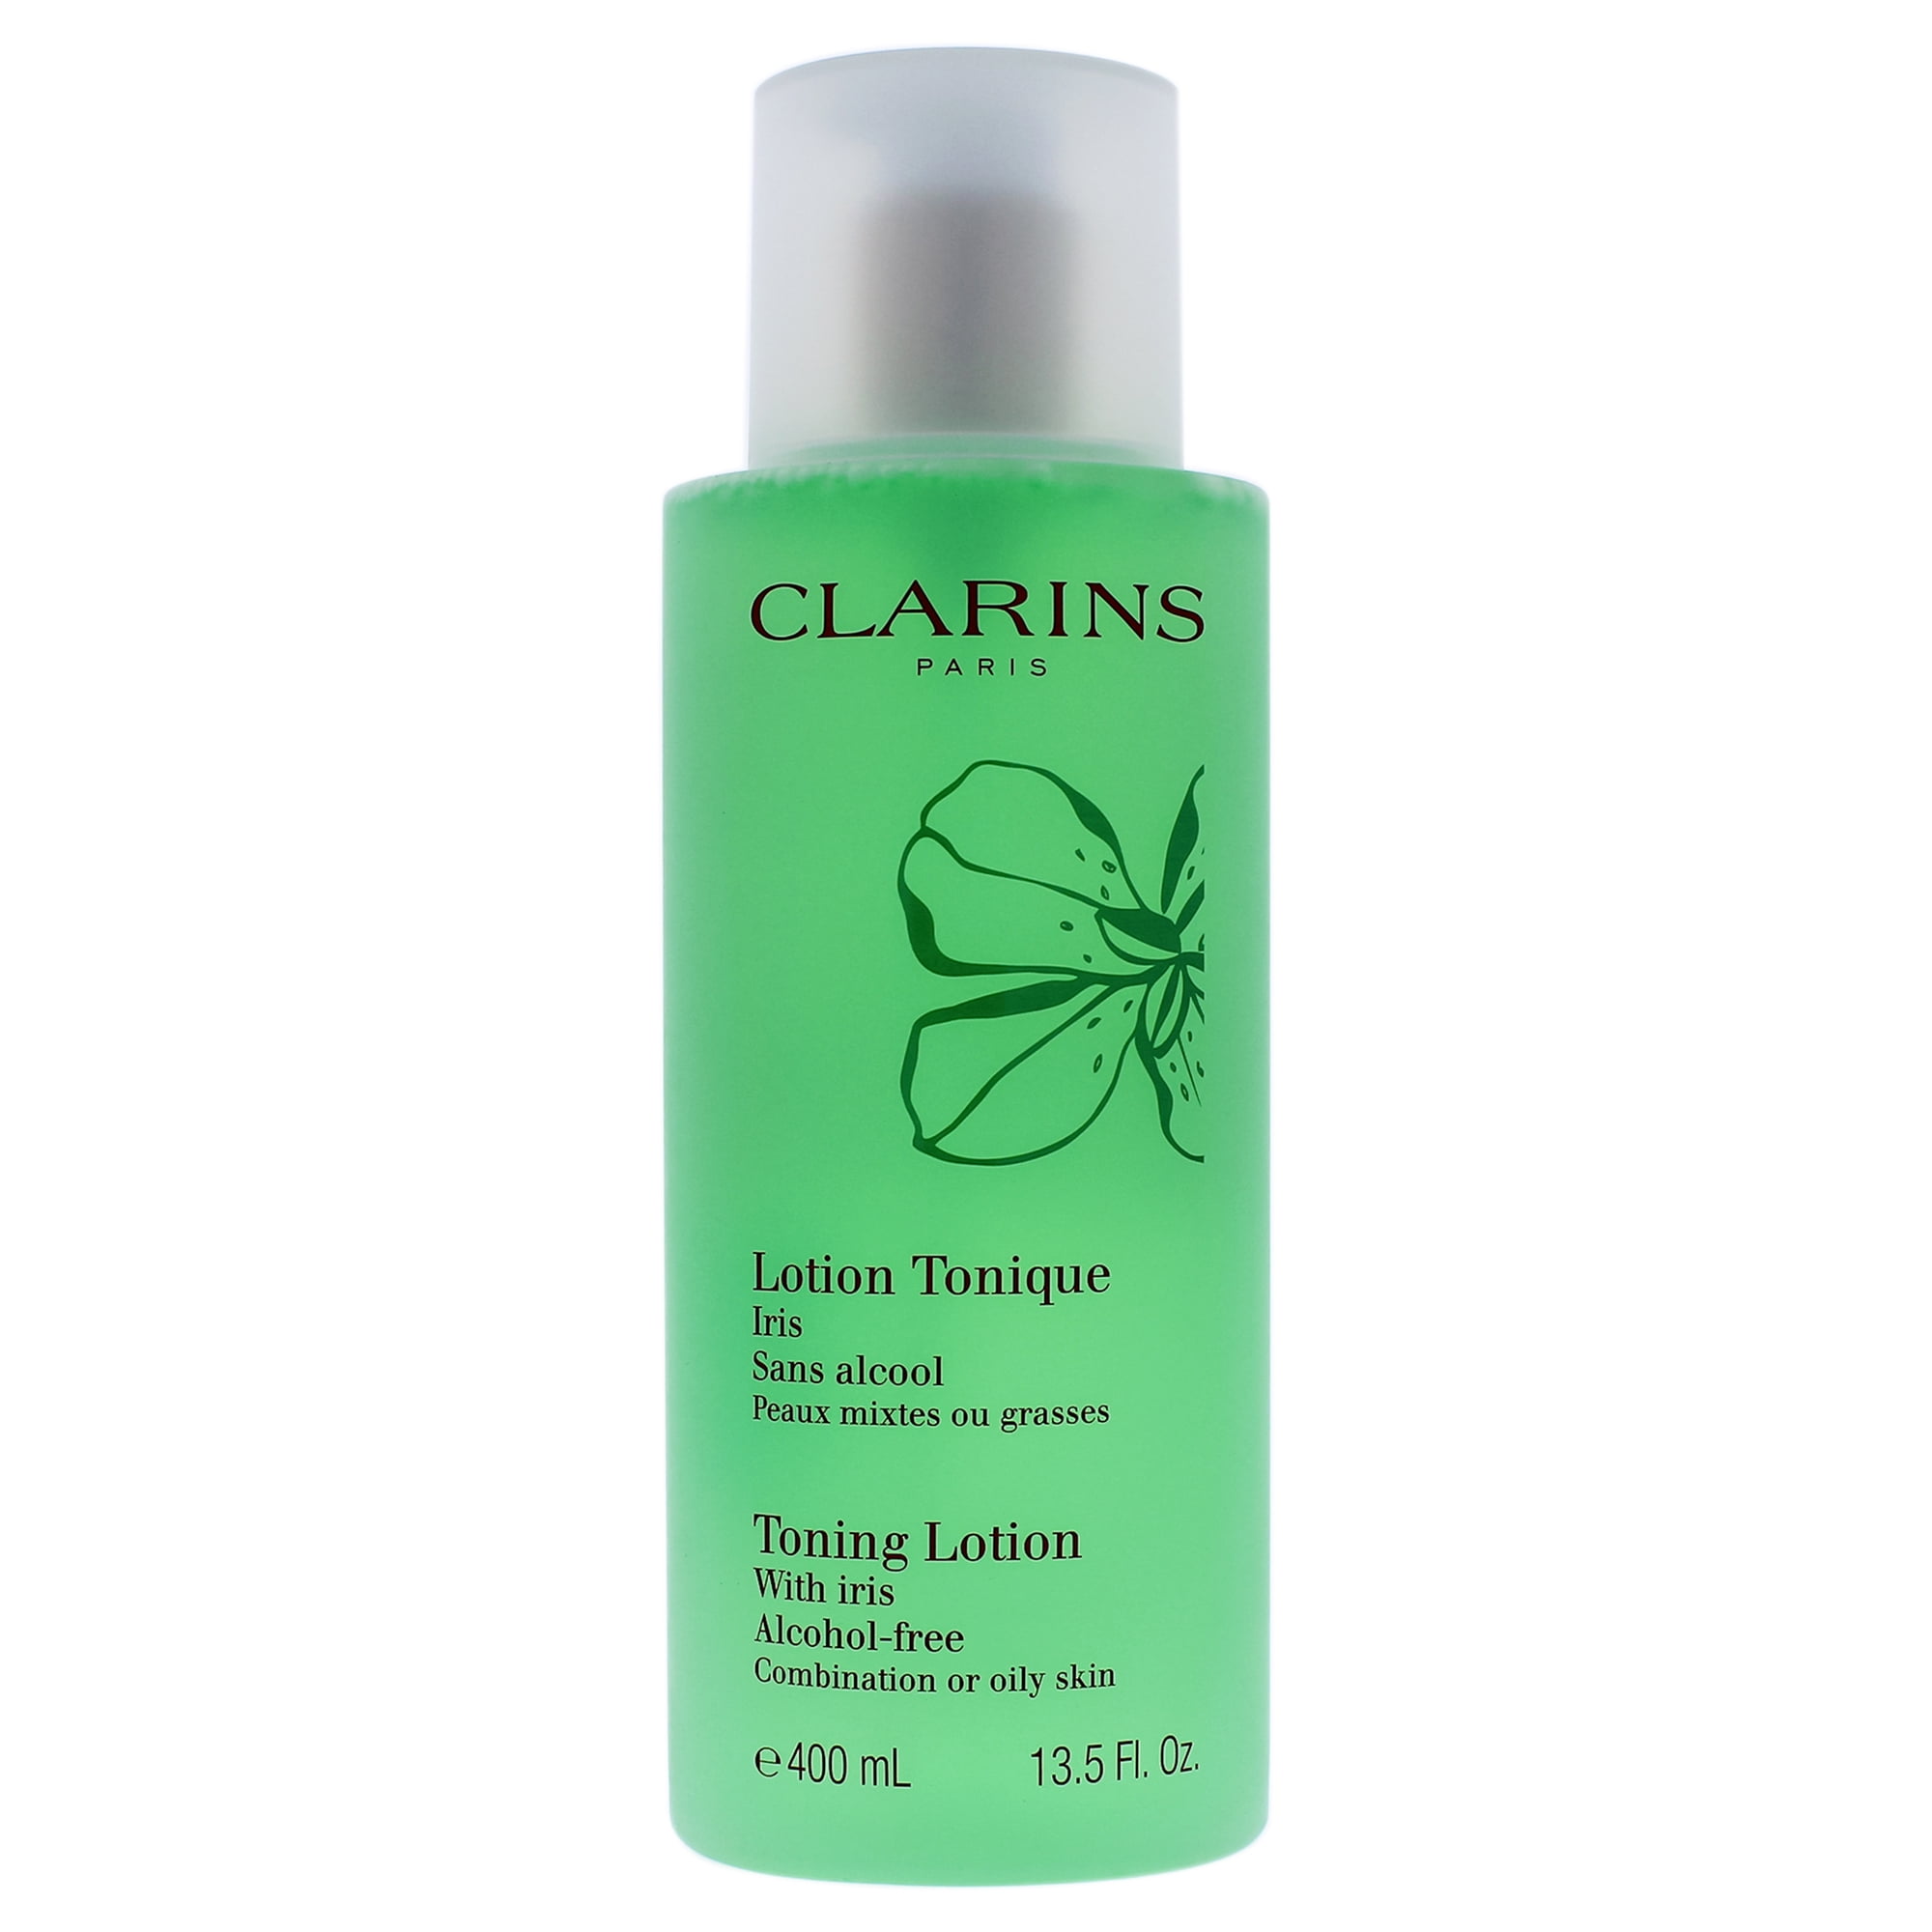 Toning lotion. Clarins Lotion Tonique Iris. Clarins Hydrating Toning Lotion. Clarins Bio Lotion Tonique. Clarins тоник для жирной кожи.